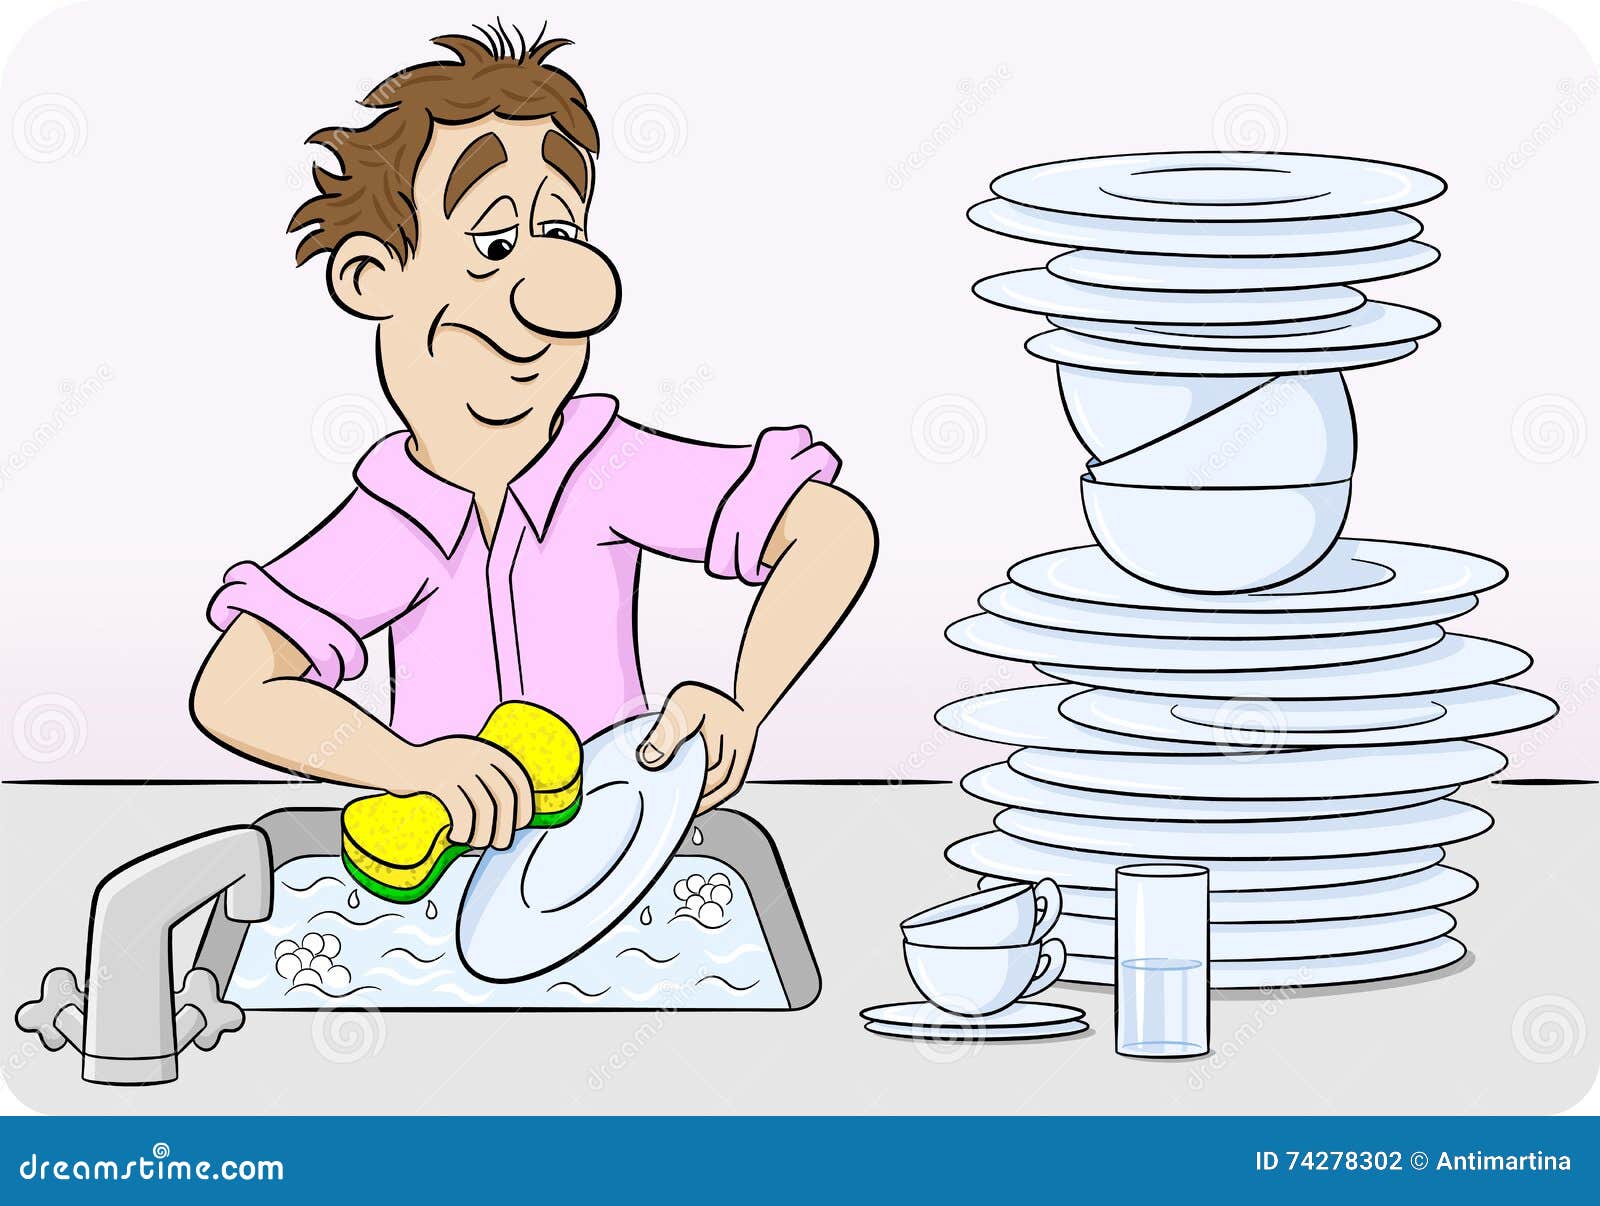 Washing The Dishes Royalty-Free Stock Photo | CartoonDealer.com #1868691